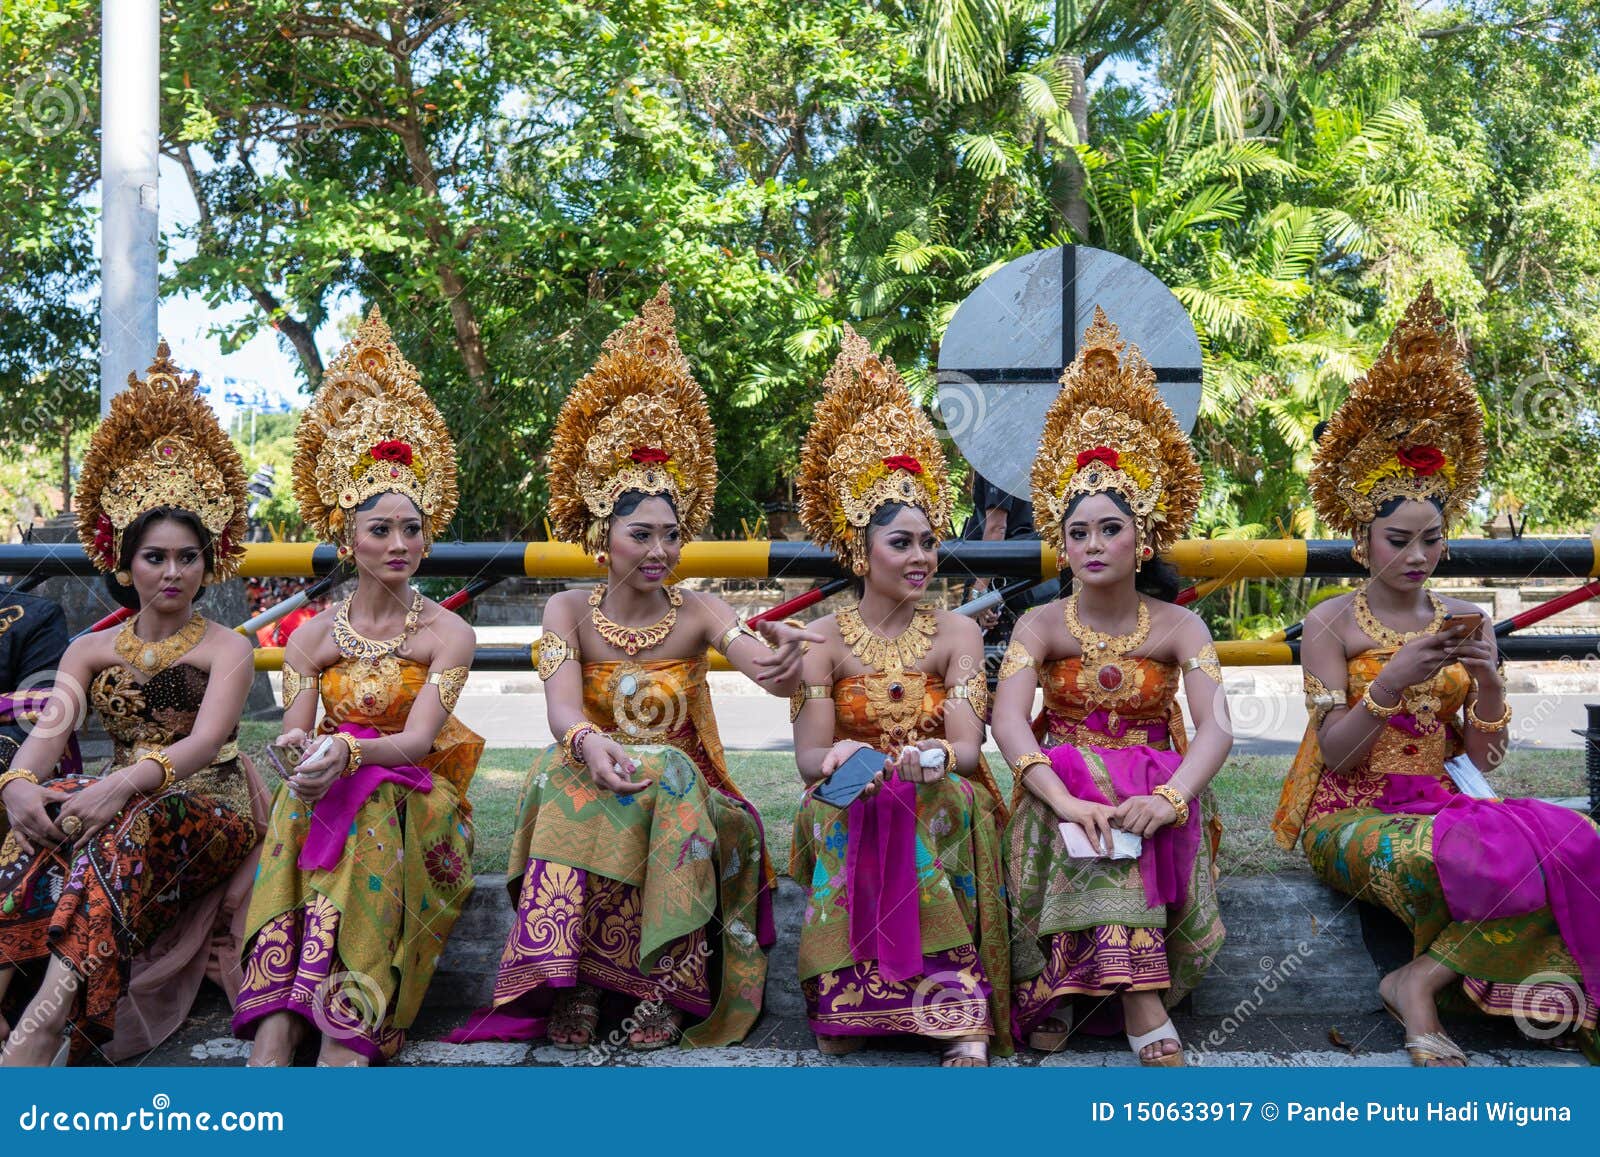 DENPASAR/BALI-JUNE 15 2019: Young Balinese women wearing traditional Balinese headdress and traditional sarong at the opening. R r o